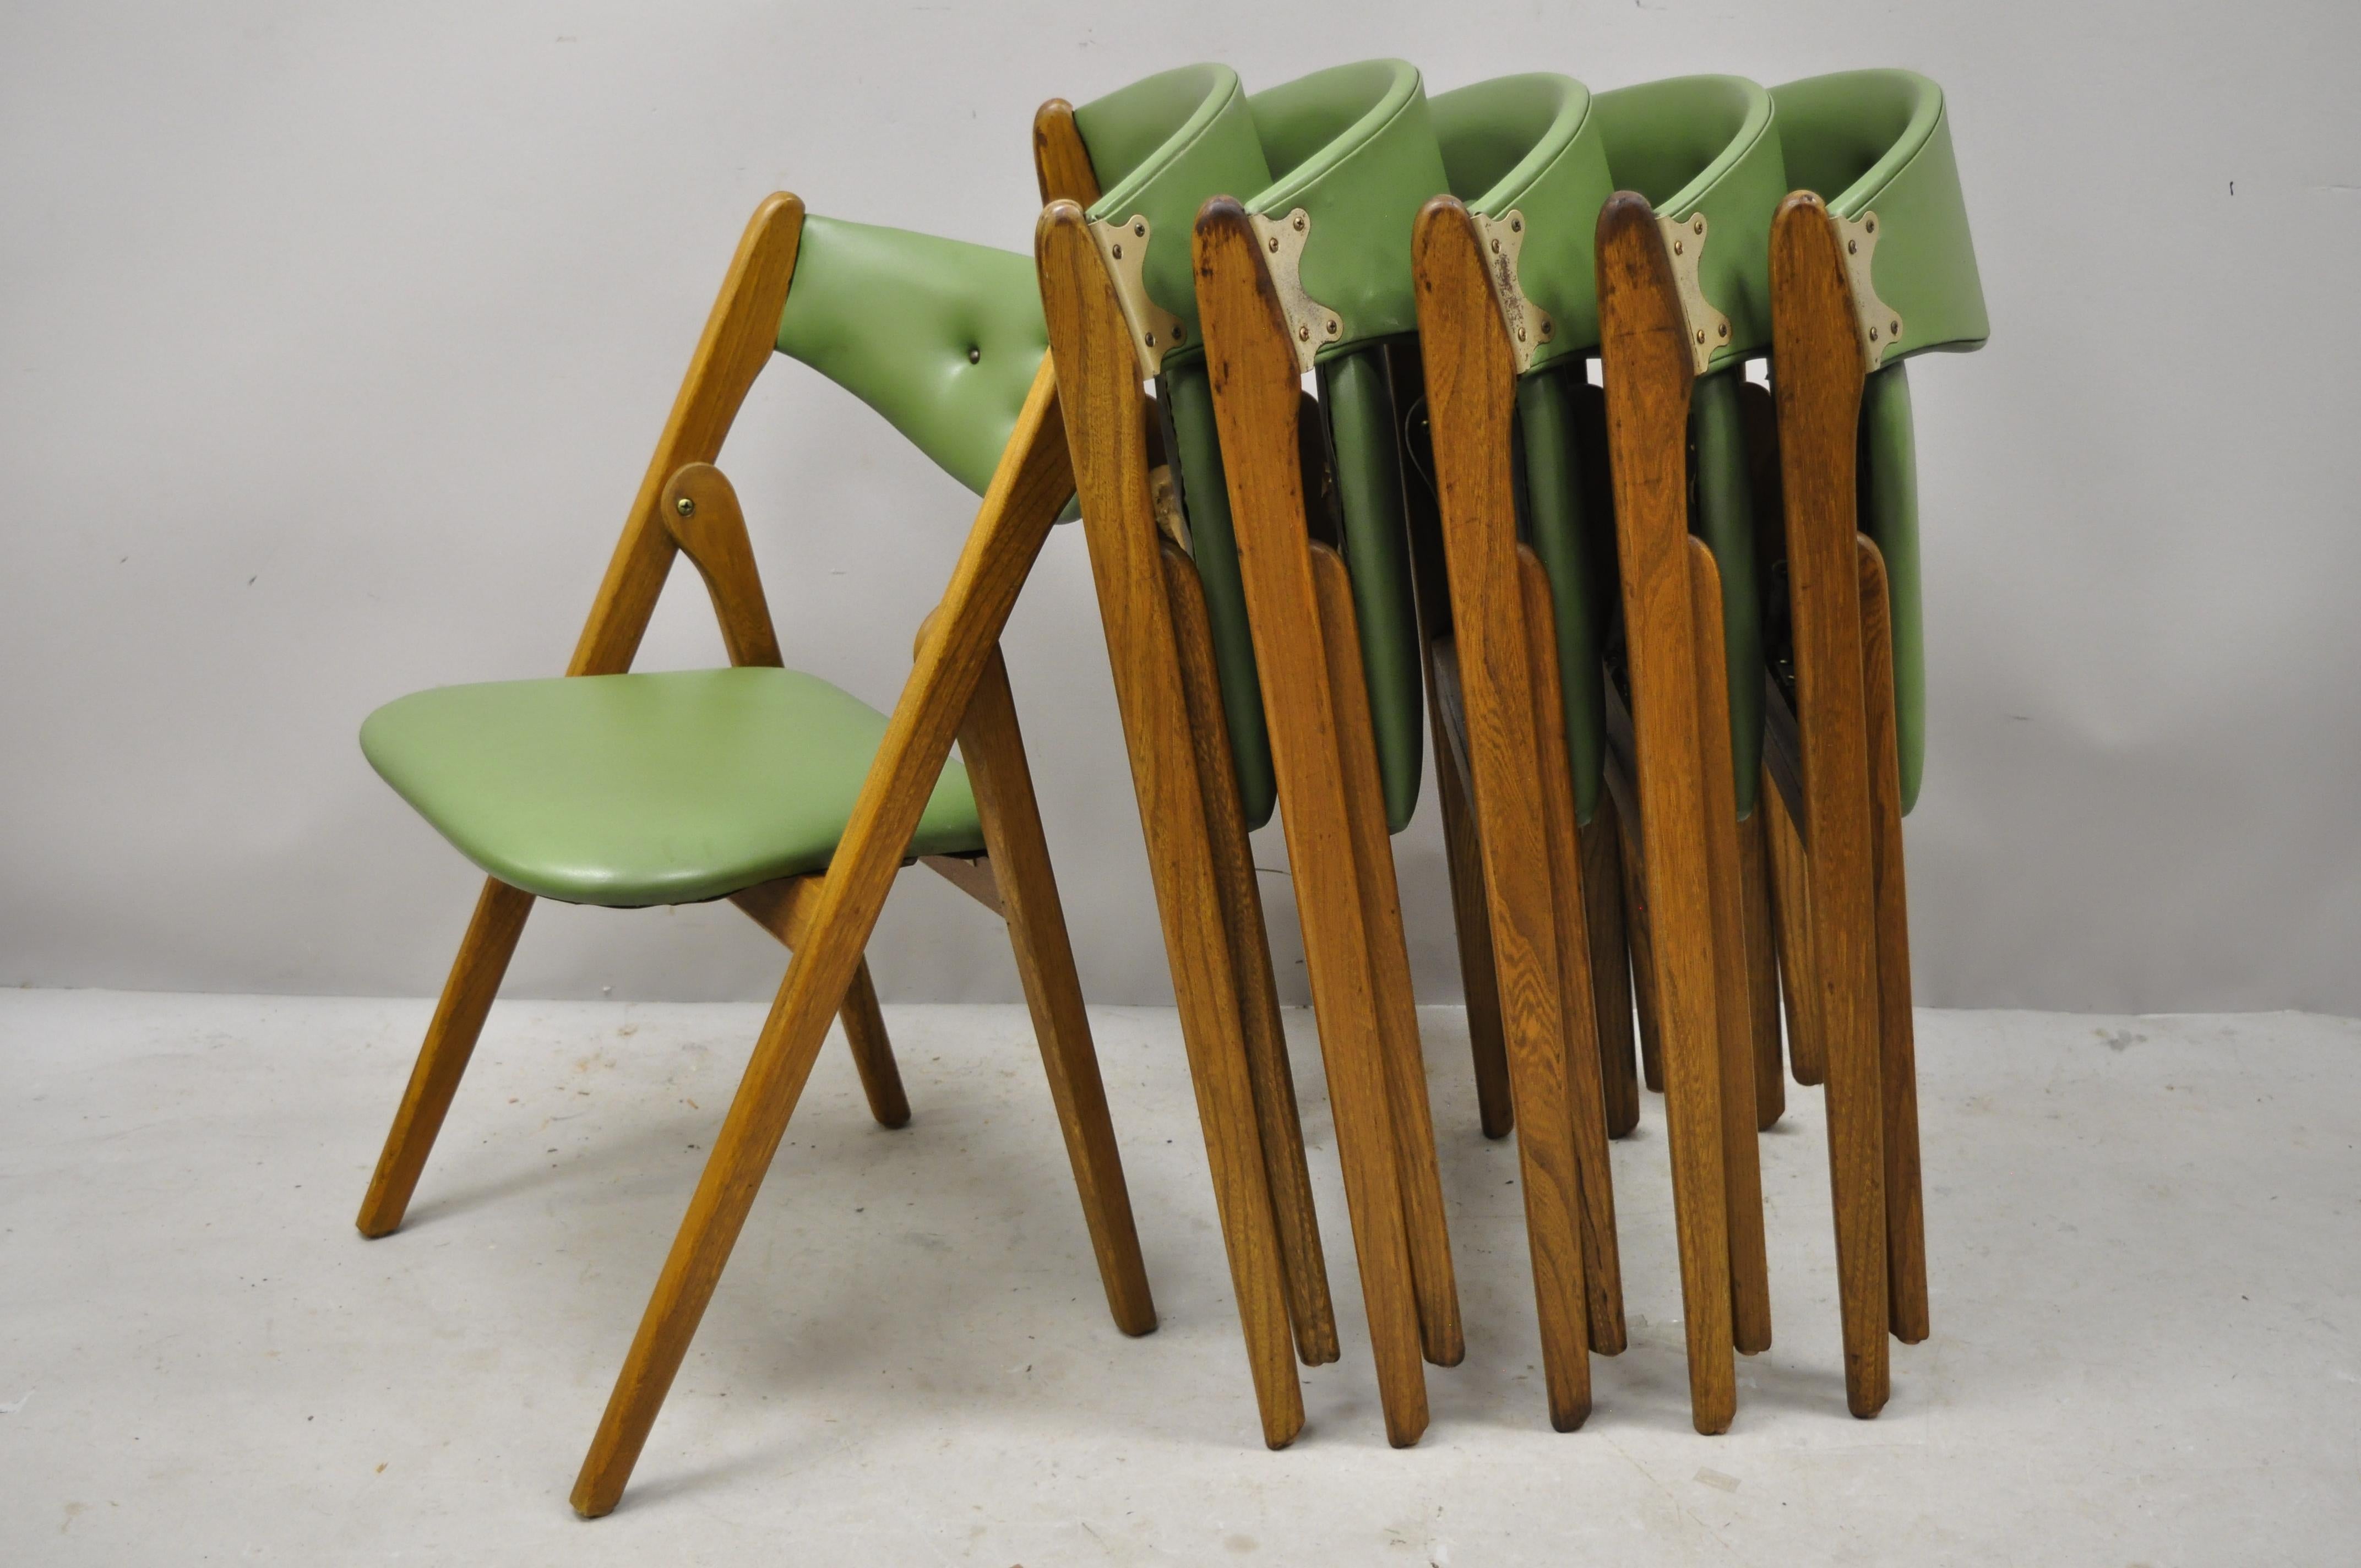 Mid-Century Modern Coronet Wonderfold Norquist green vinyl folding chairs - Set of 6. Item features green vinyl upholstery, (6) folding chairs, solid wood frame, beautiful wood grain, original label, clean modernist lines, quality American